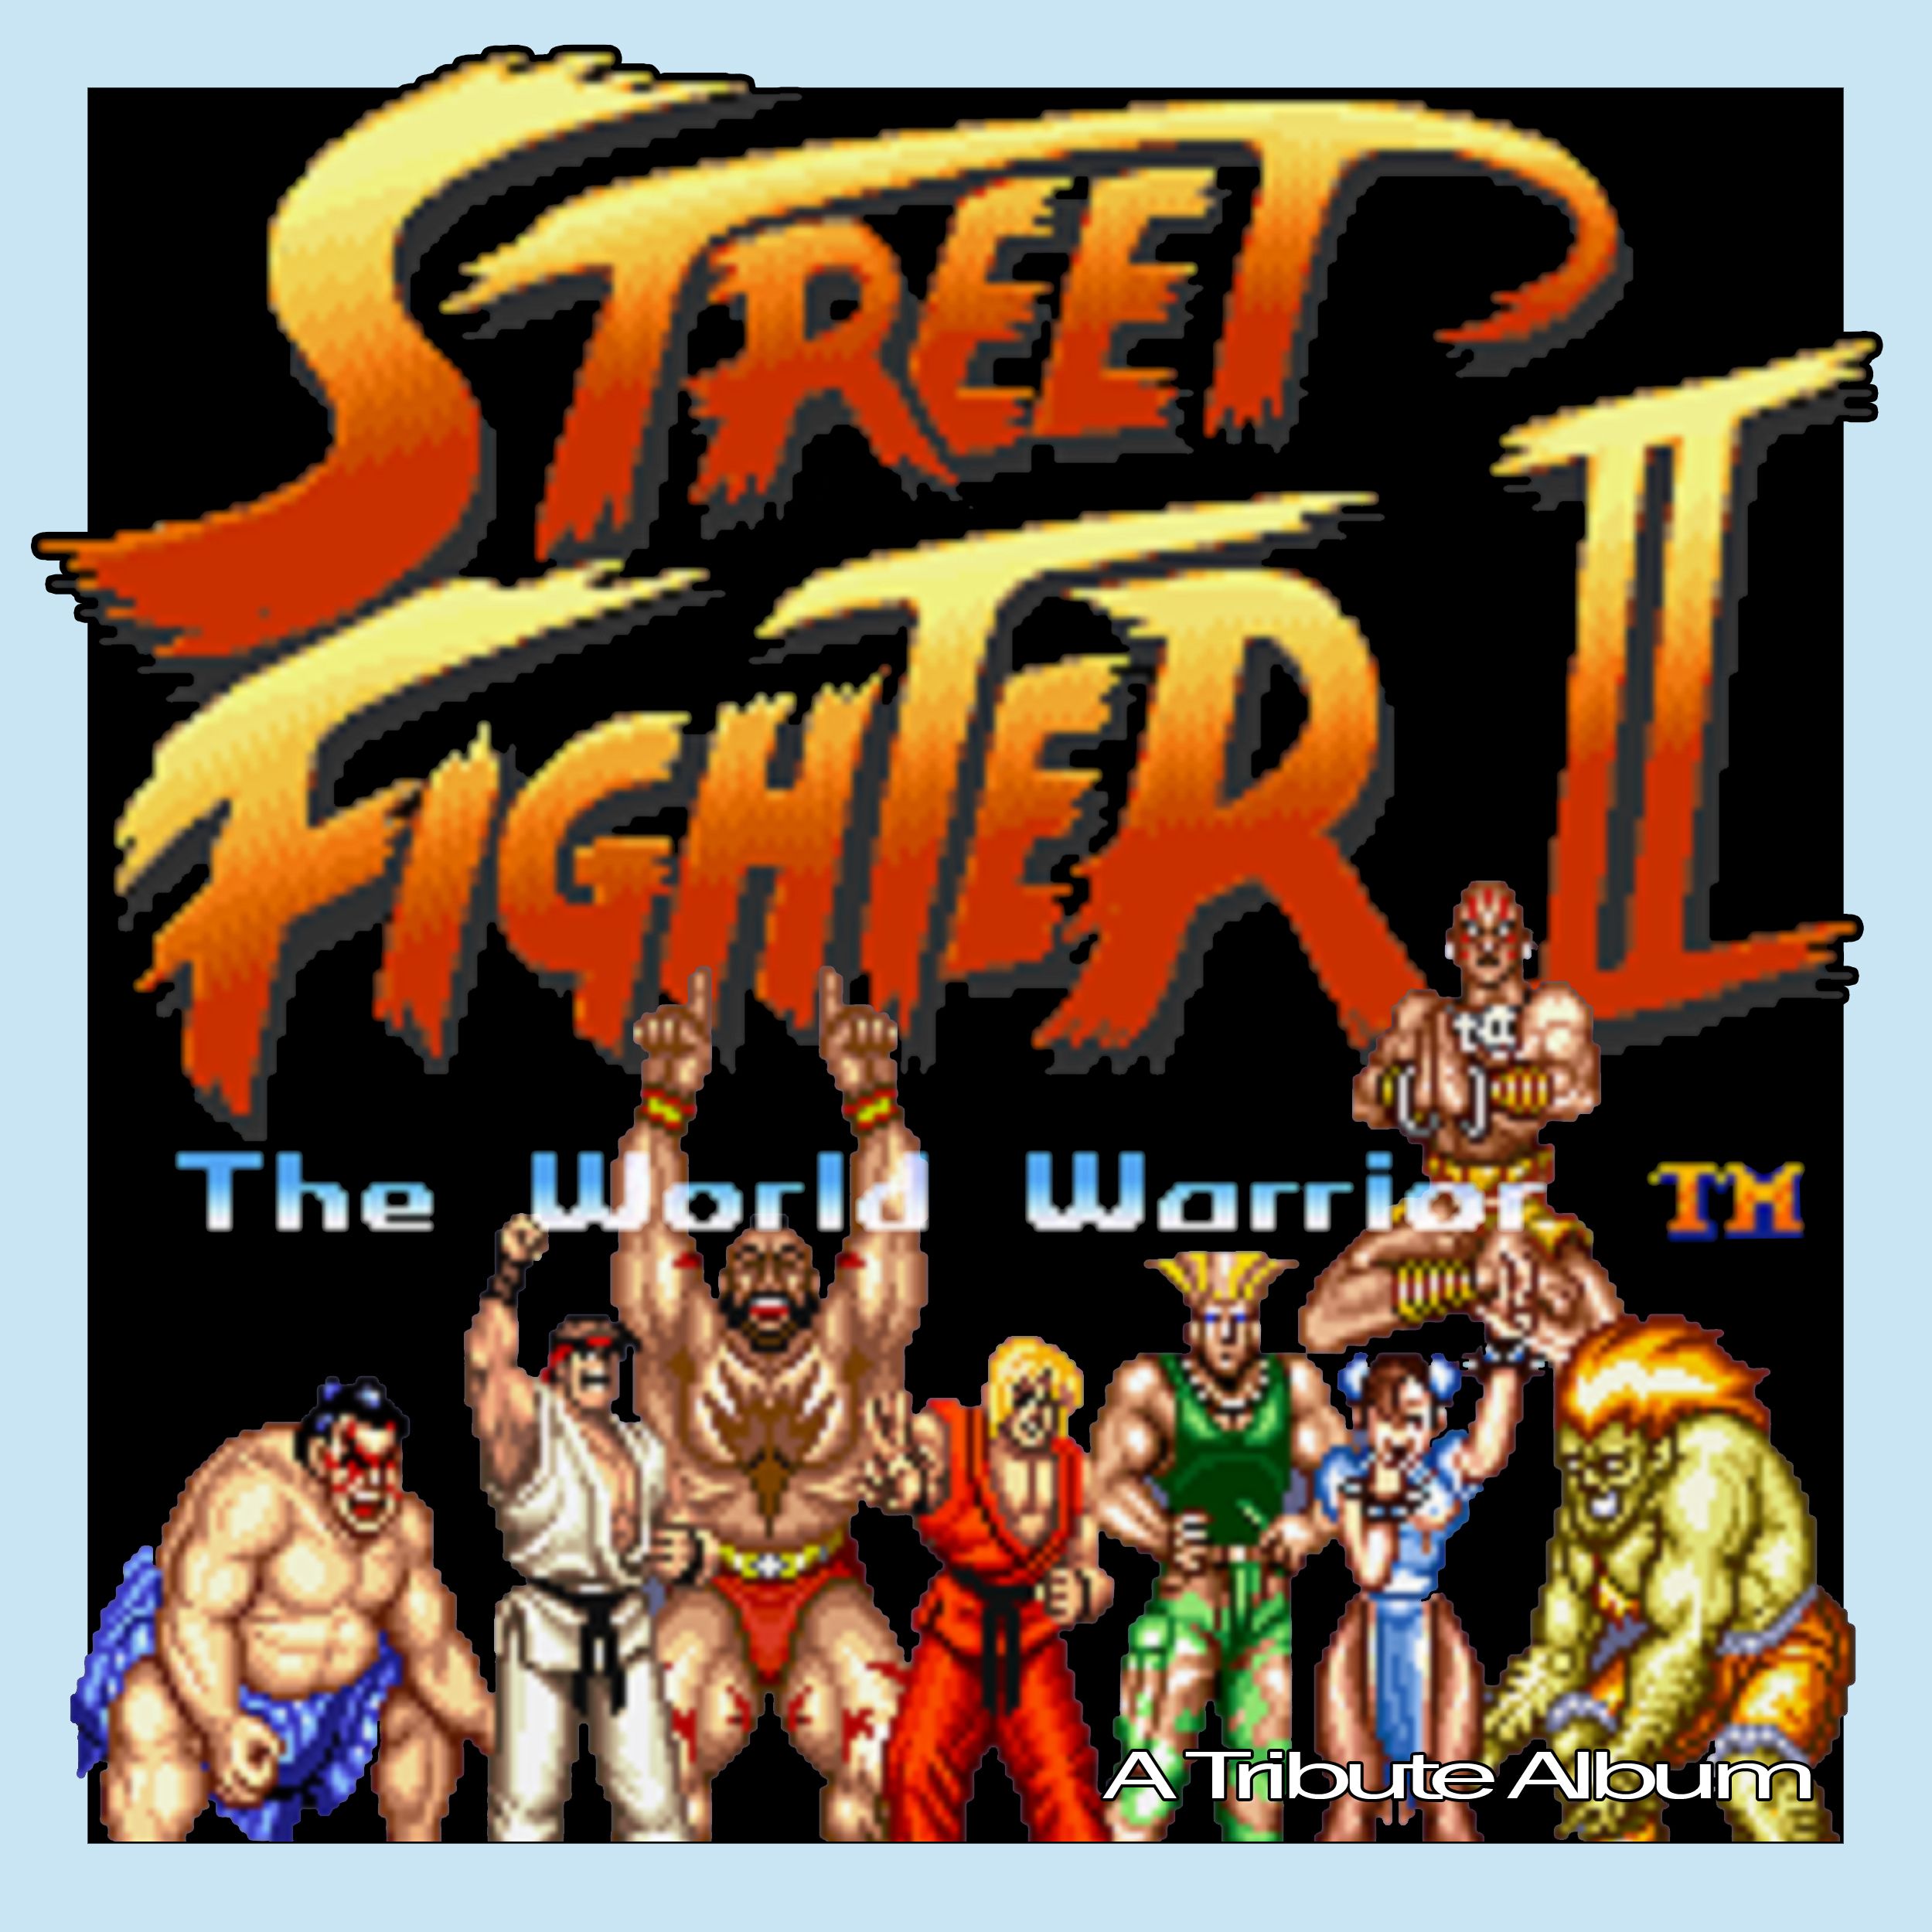 Street Fighter II: The World Warrior #21